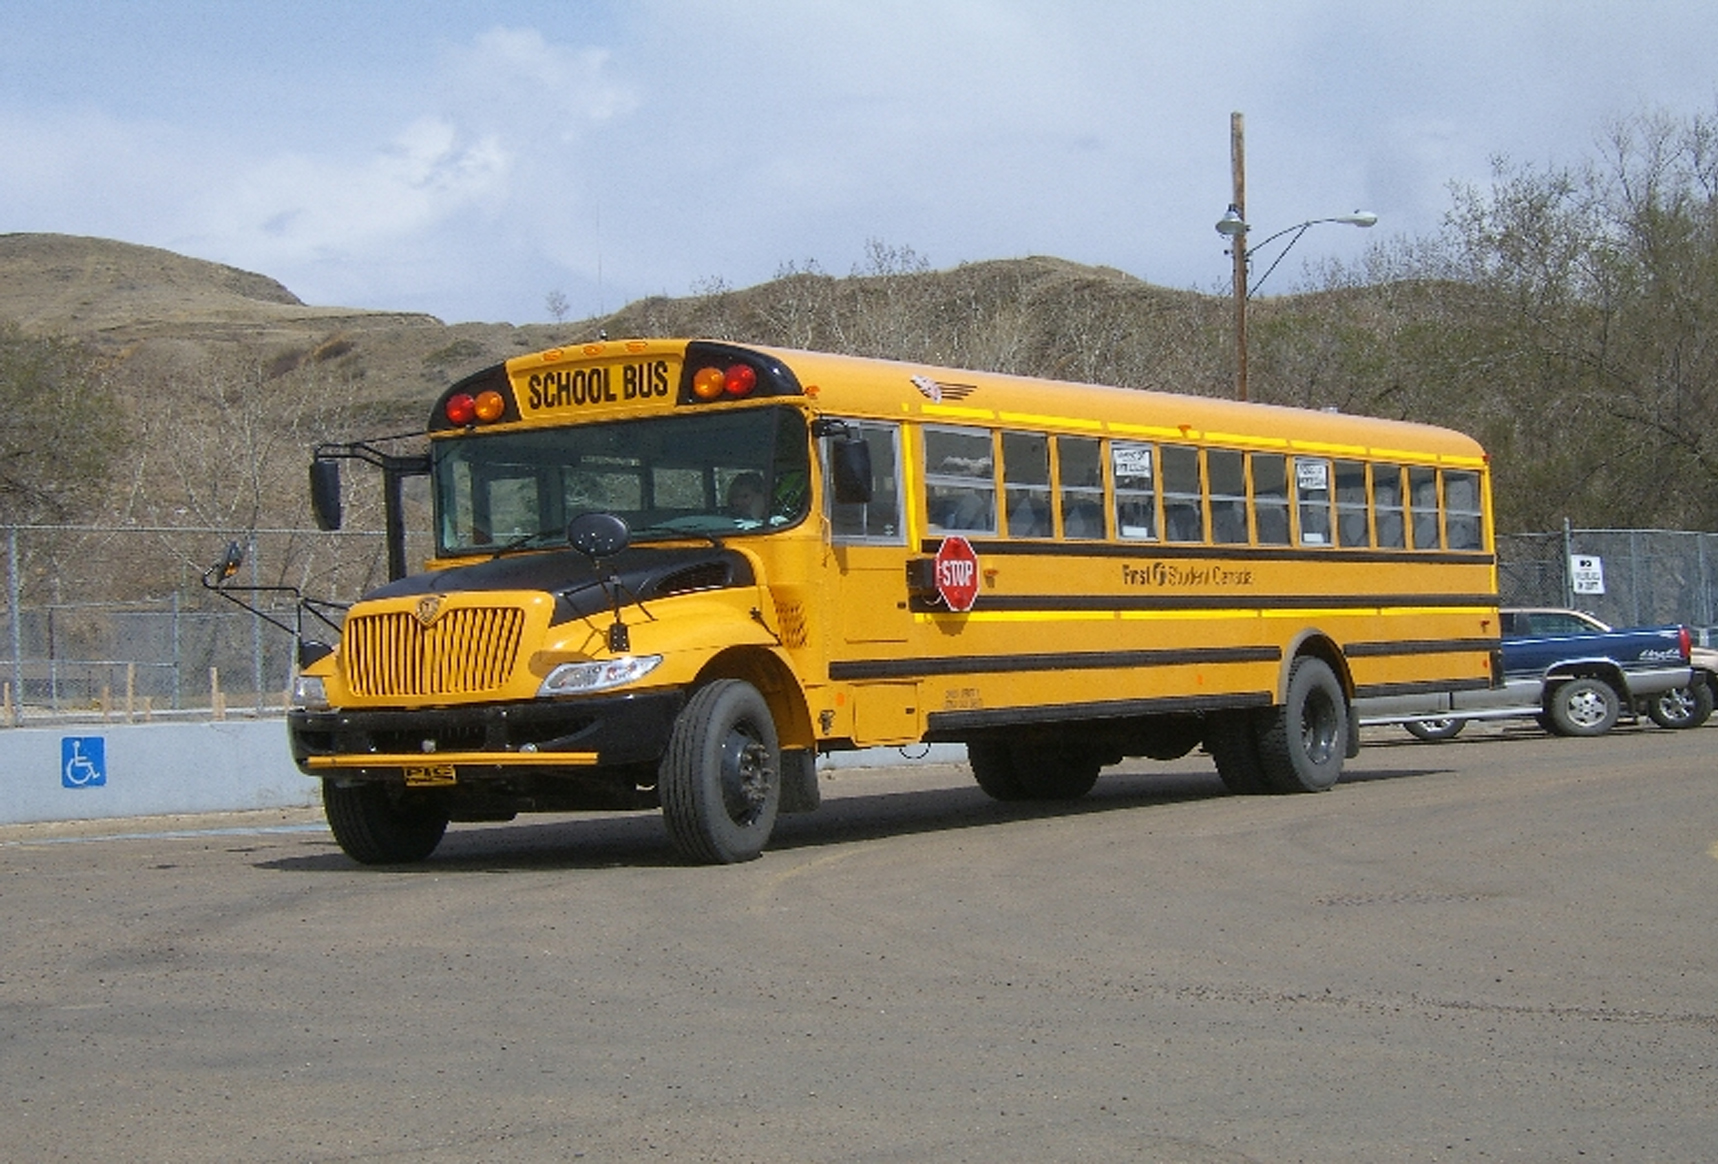 Full Size School Bus Rent A School Bus Canada rent a school bus canada